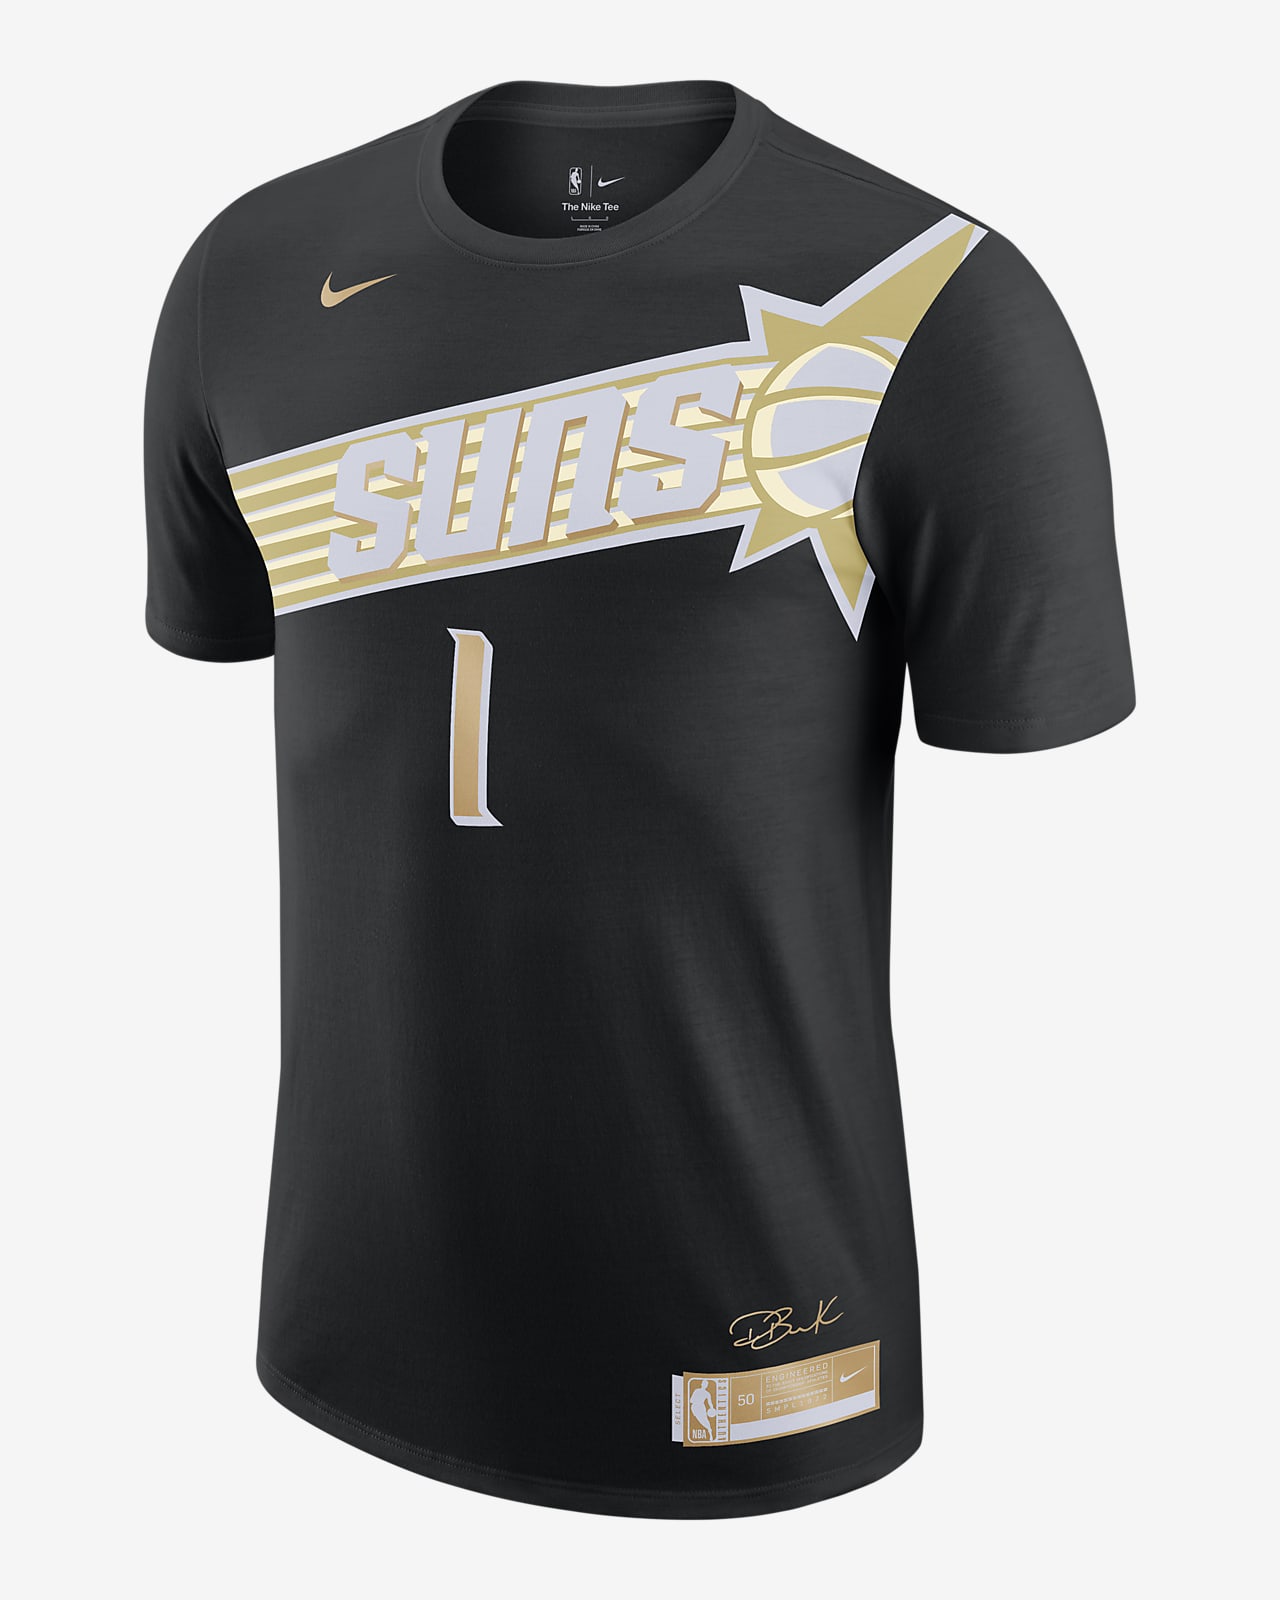 Devin Booker Select Series Men's Nike NBA T-Shirt